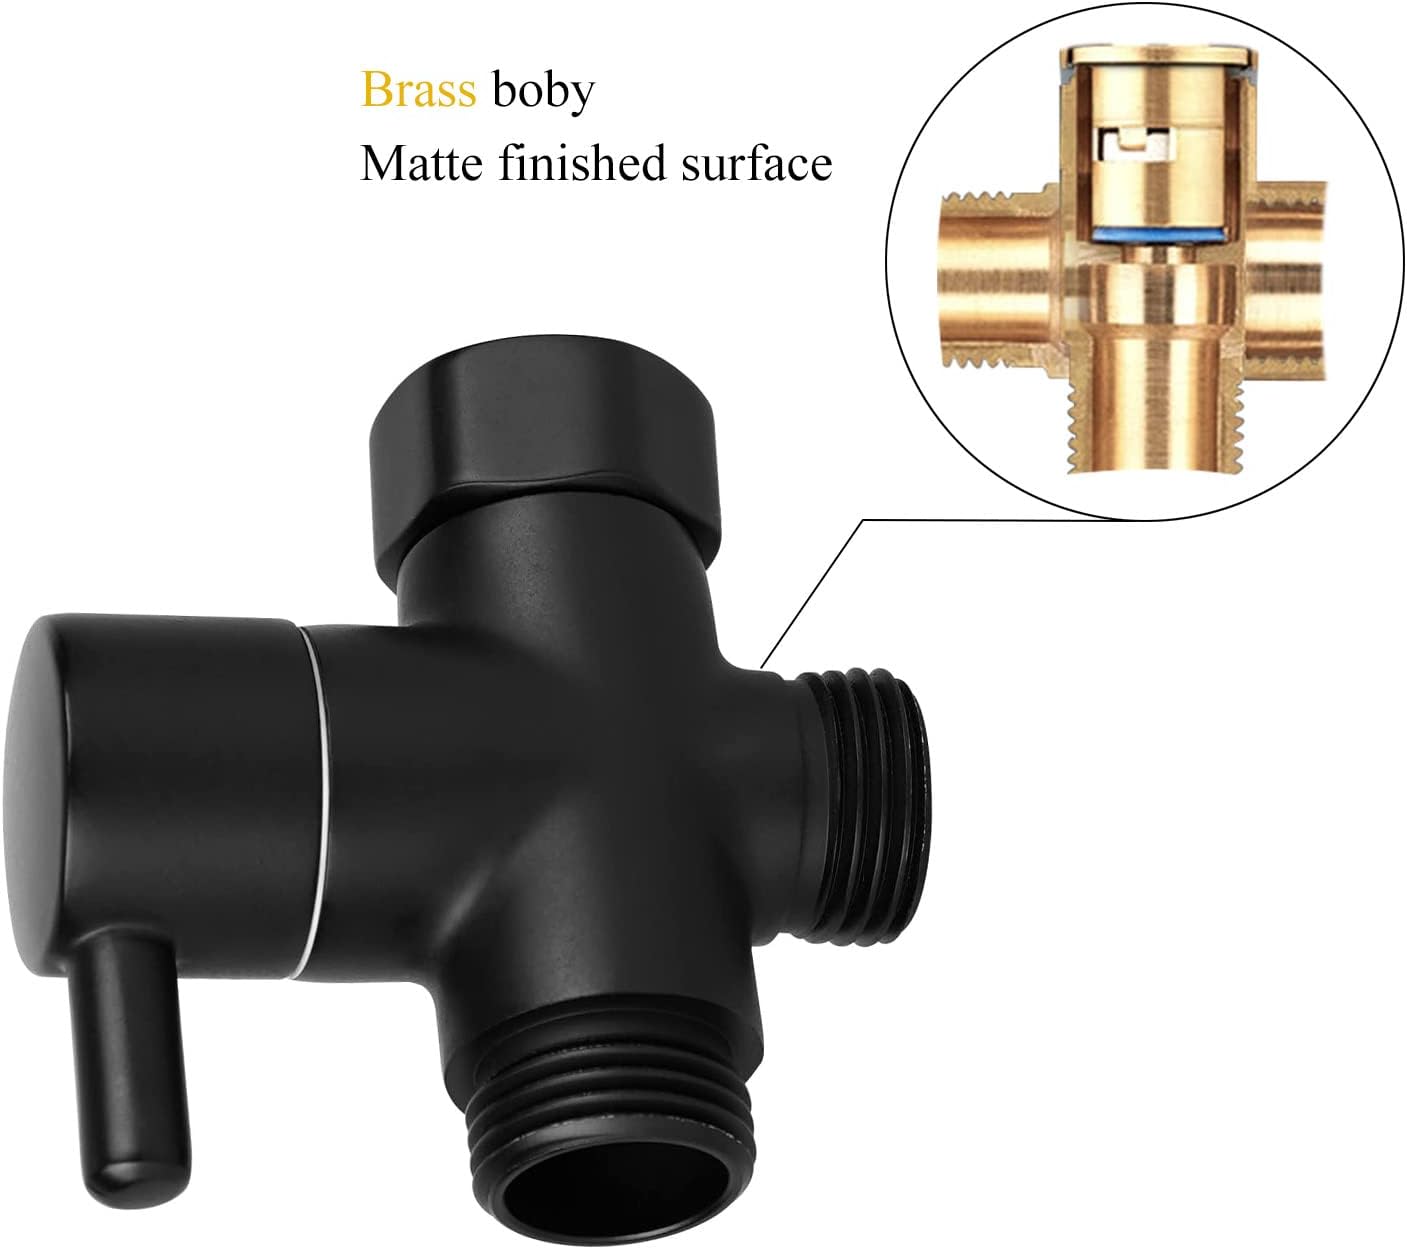 Sneatup Solid Brass 3-way G1/2 Shower Diverter